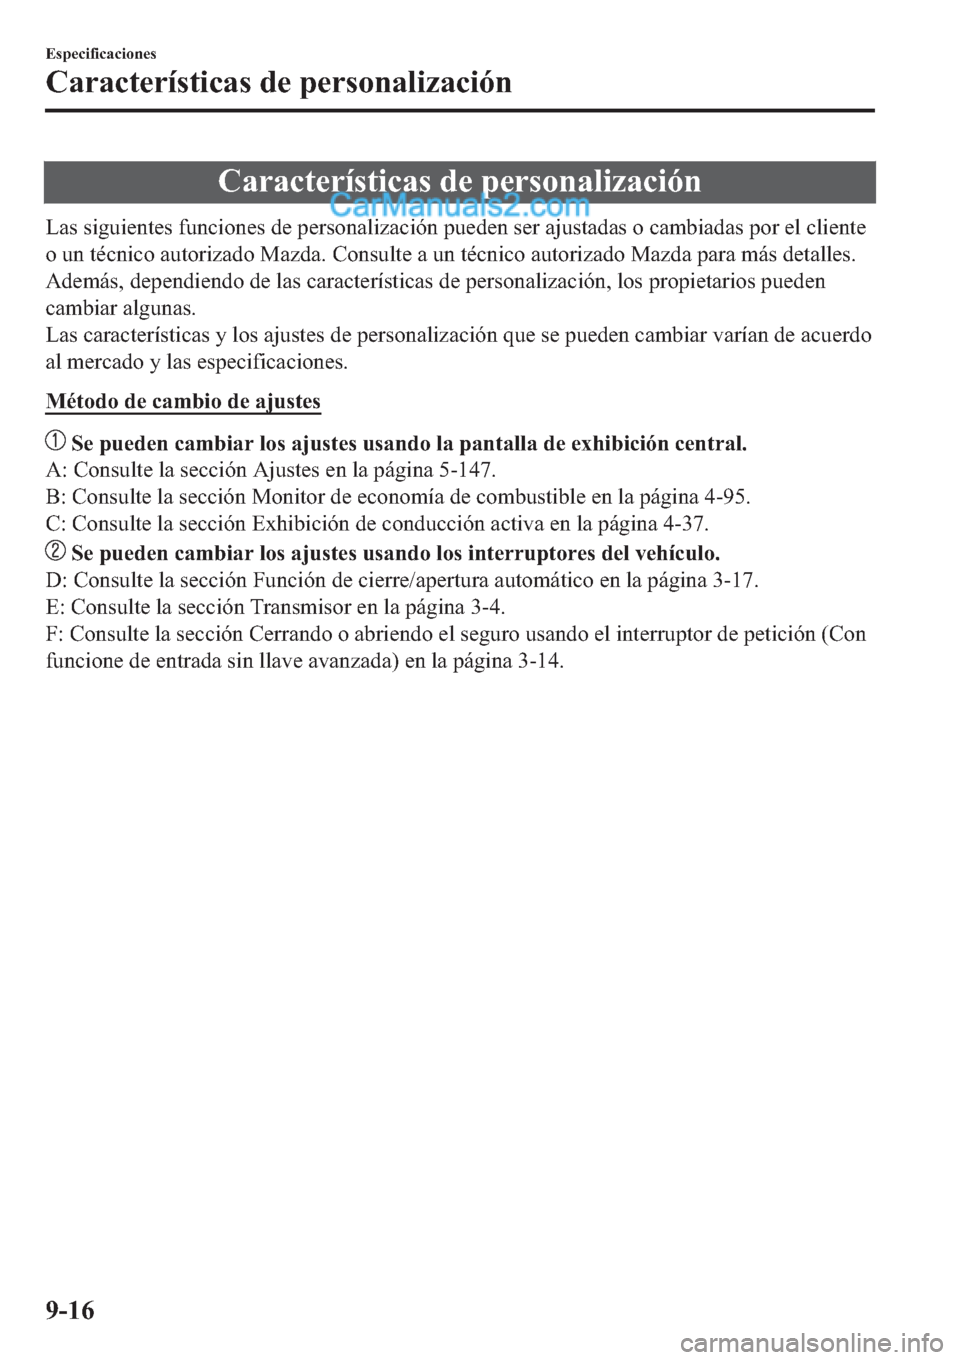 MAZDA MODEL 2 2019  Manual del propietario (in Spanish) �&�D�U�D�F�W�H�U�t�V�W�L�F�D�V��G�H��S�H�U�V�R�Q�D�O�L�]�D�F�L�y�Q
�/�D�V��V�L�J�X�L�H�Q�W�H�V��I�X�Q�F�L�R�Q�H�V��G�H��S�H�U�V�R�Q�D�O�L�]�D�F�L�y�Q��S�X�H�G�H�Q��V�H�U��D�M�X�V�W�D�G�D�V��